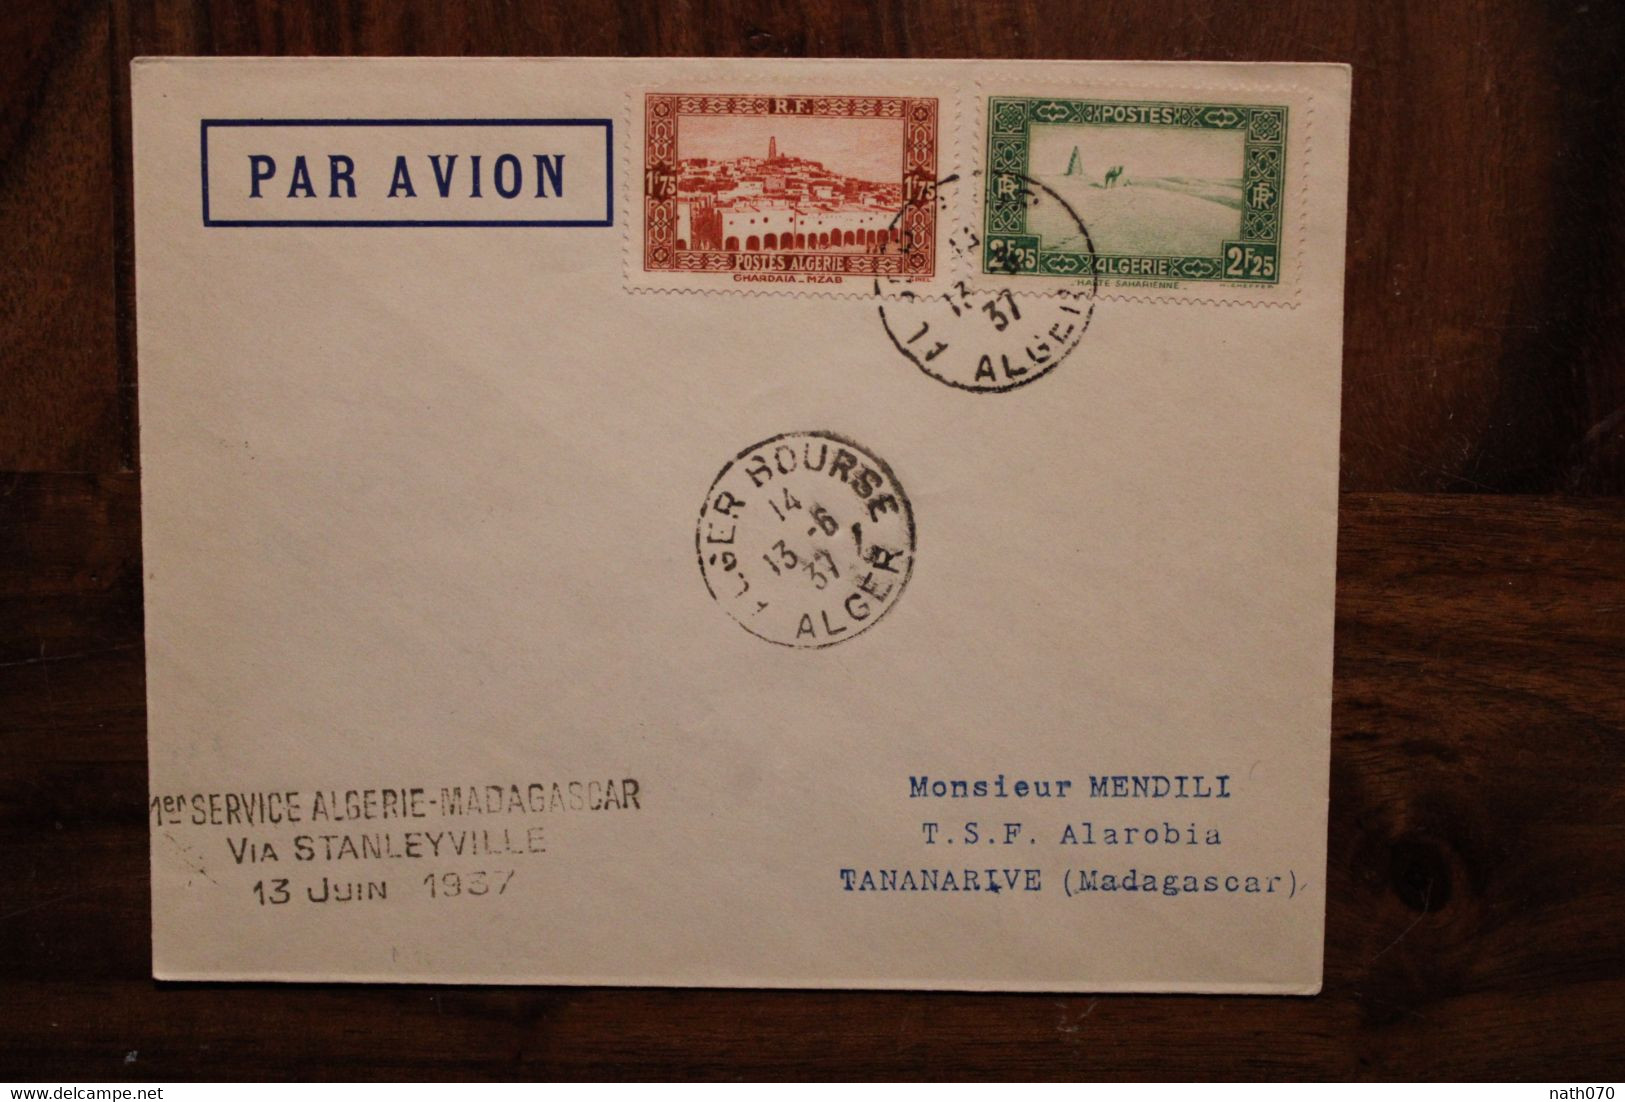 1937 1er Service Algérie Madagascar France Via Stanleyville  Enveloppe Cover Colonie Par Avion Air Mail - Posta Aerea